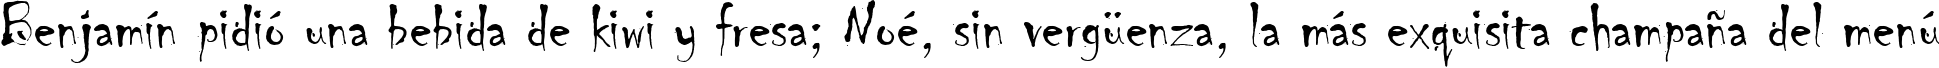 Пример написания шрифтом Chiller текста на испанском